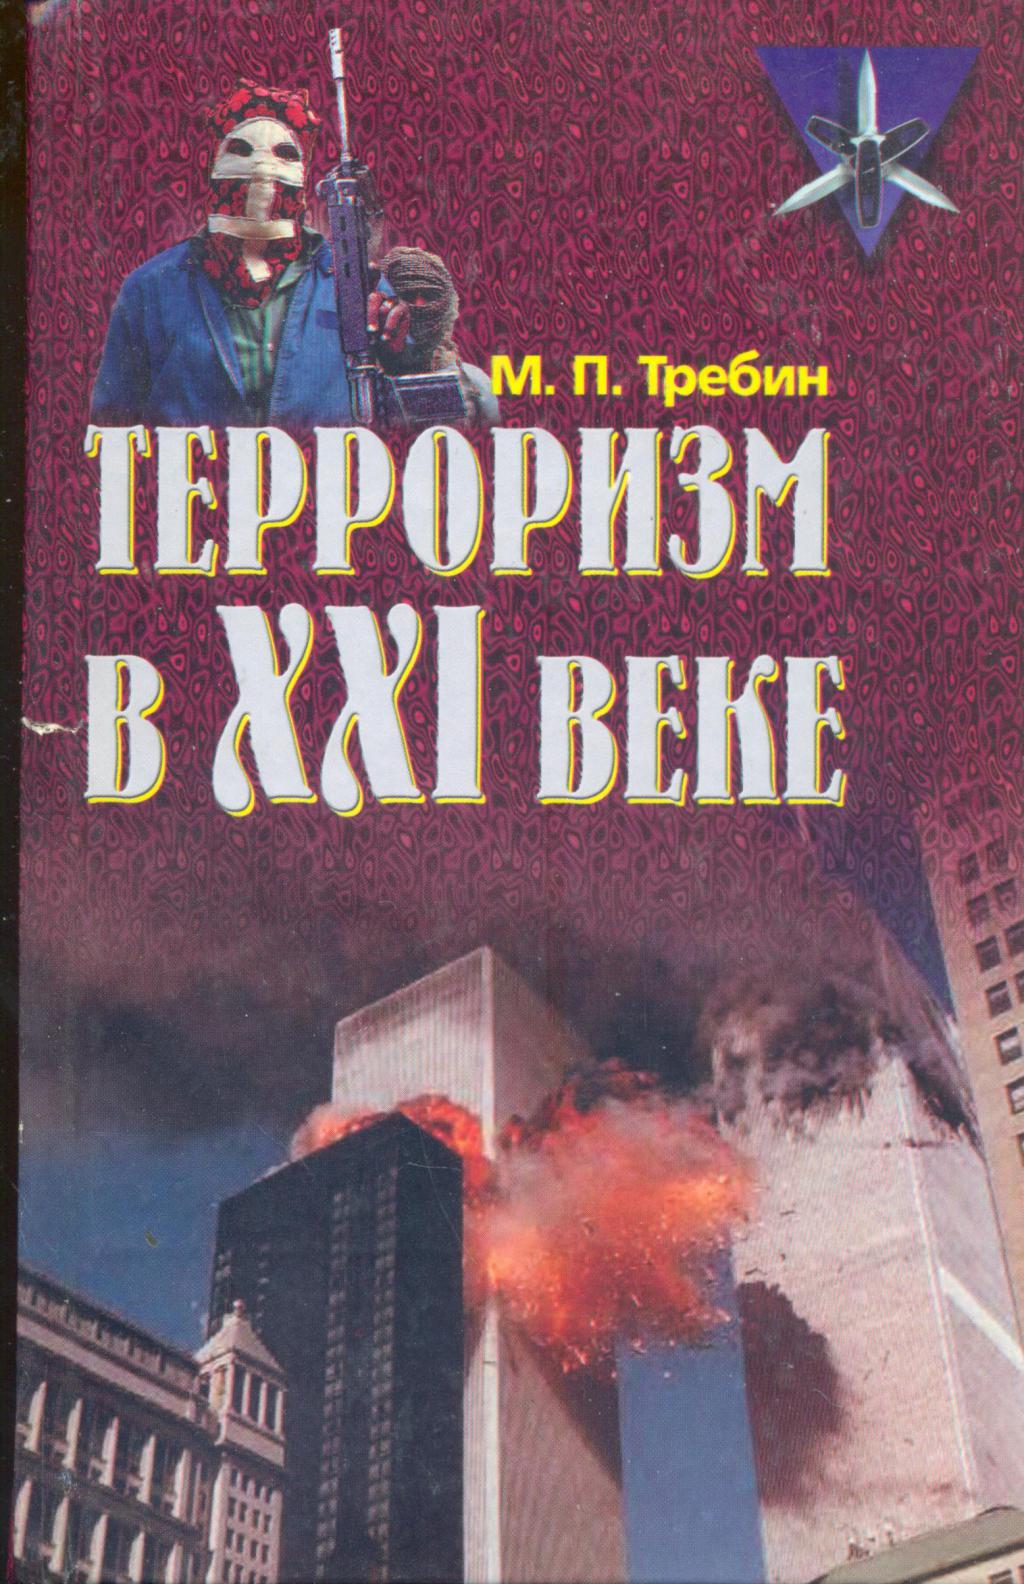 Книги про терроризм